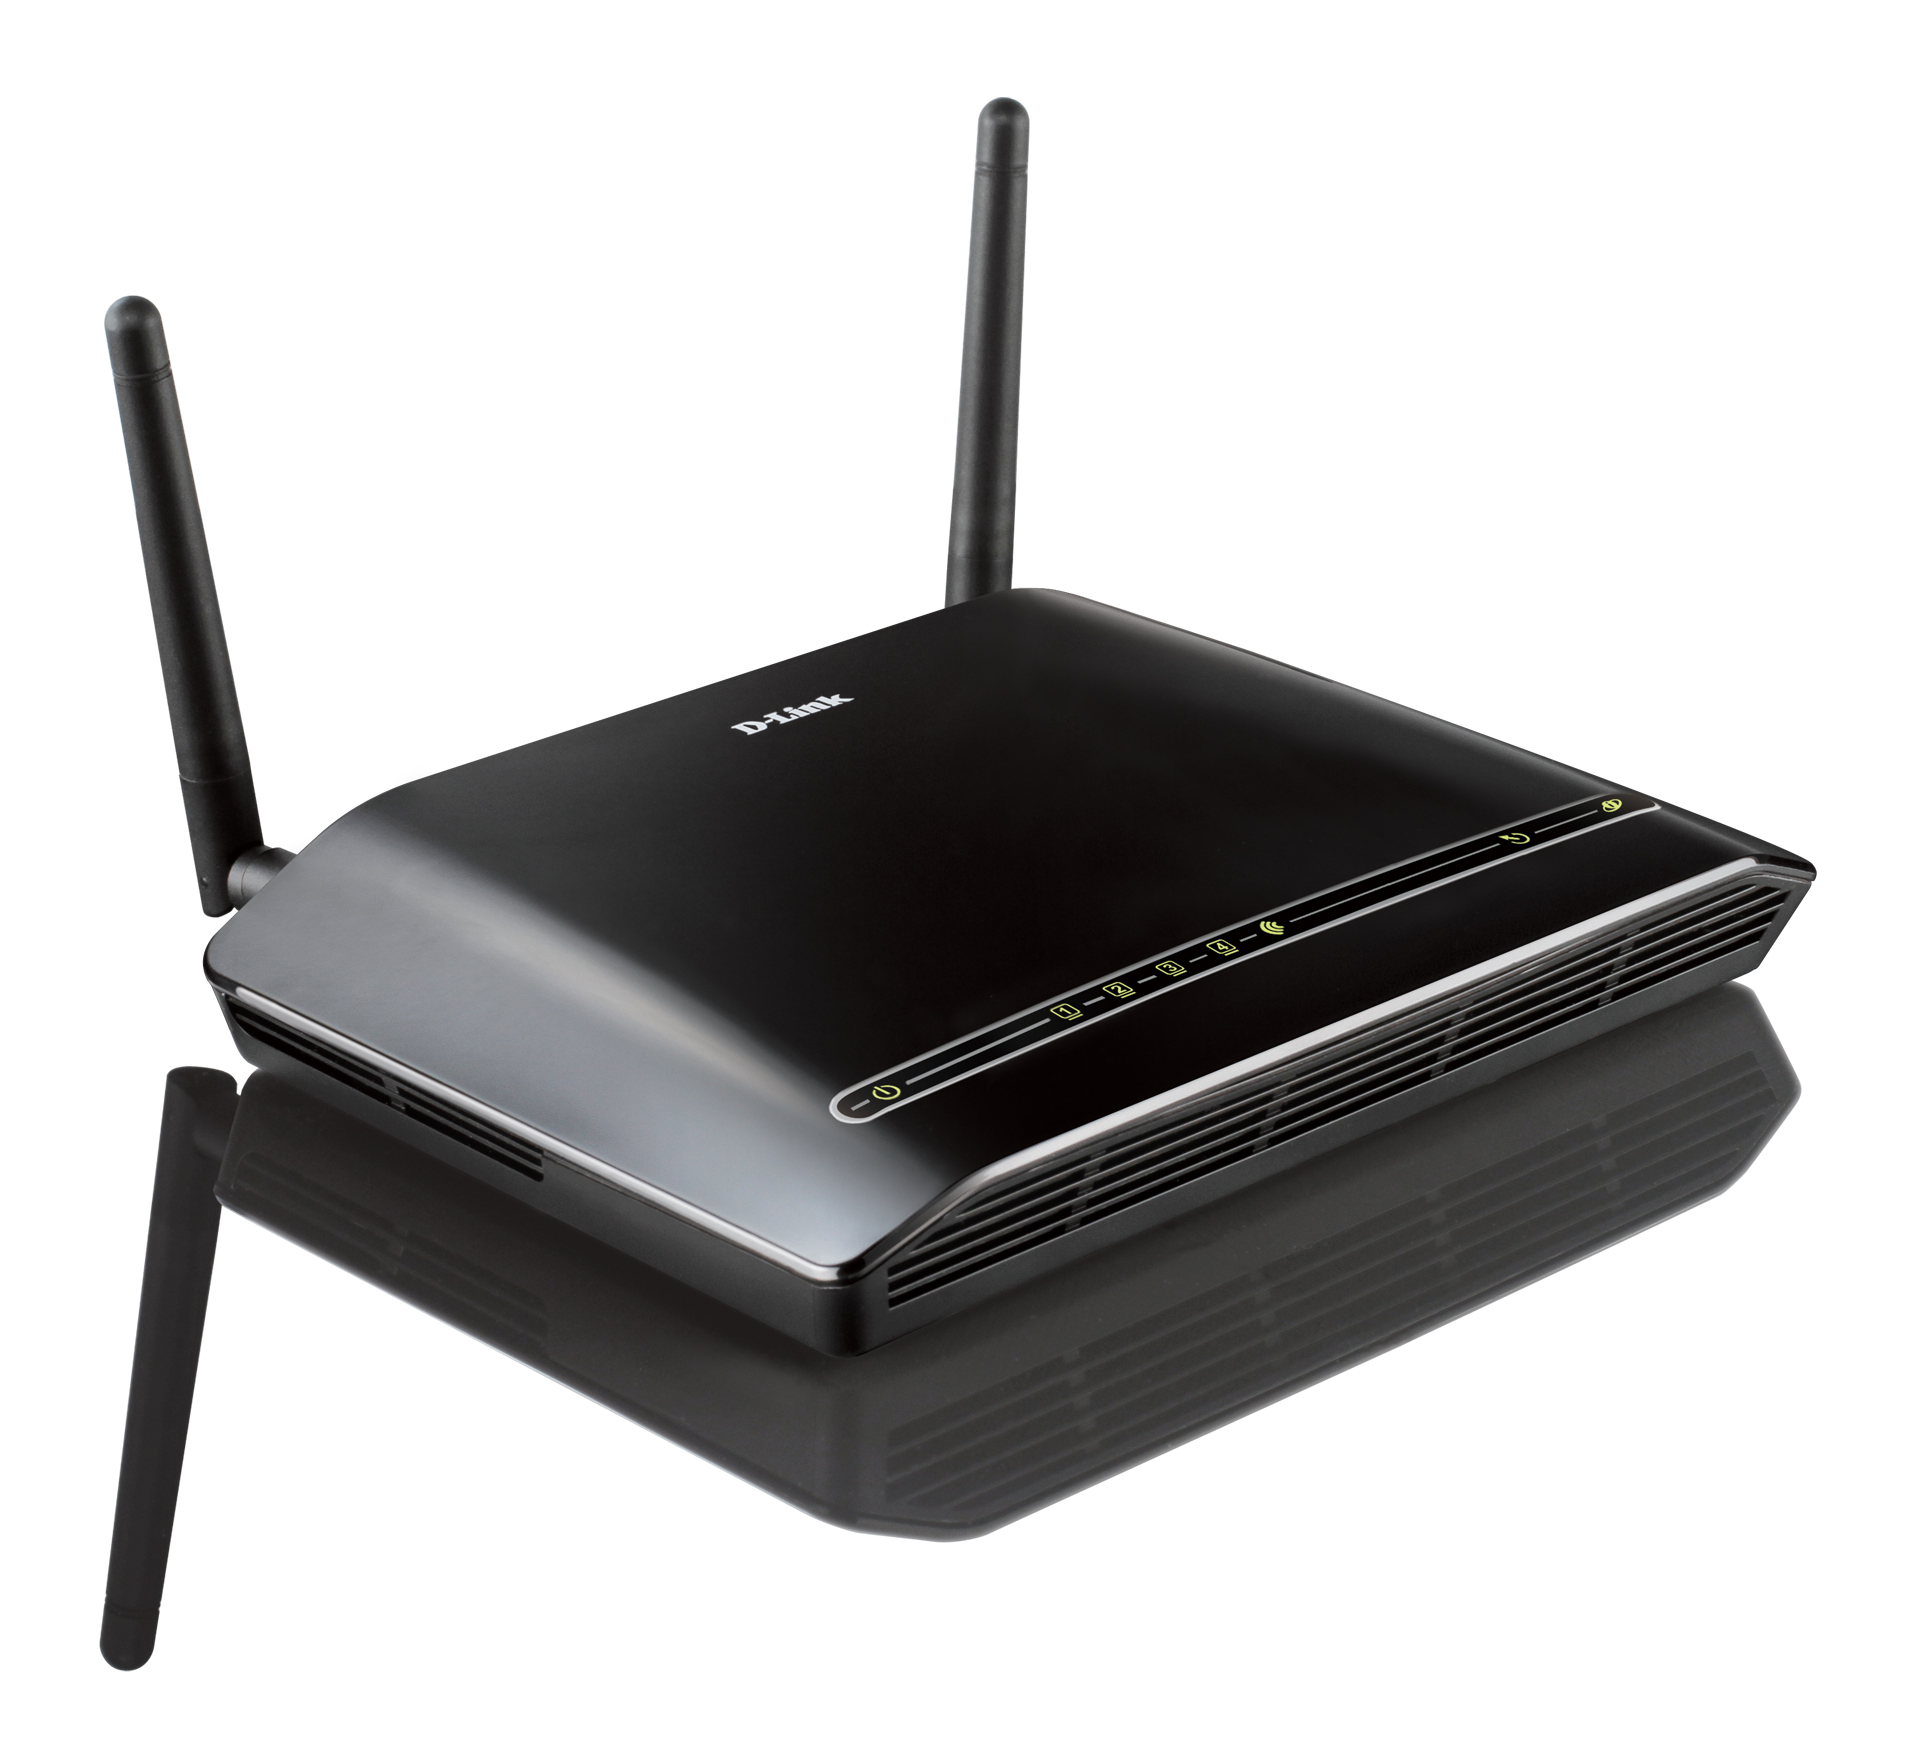 DSL2740R Wireless N300 ADSL2+ Modem Router DLink UK